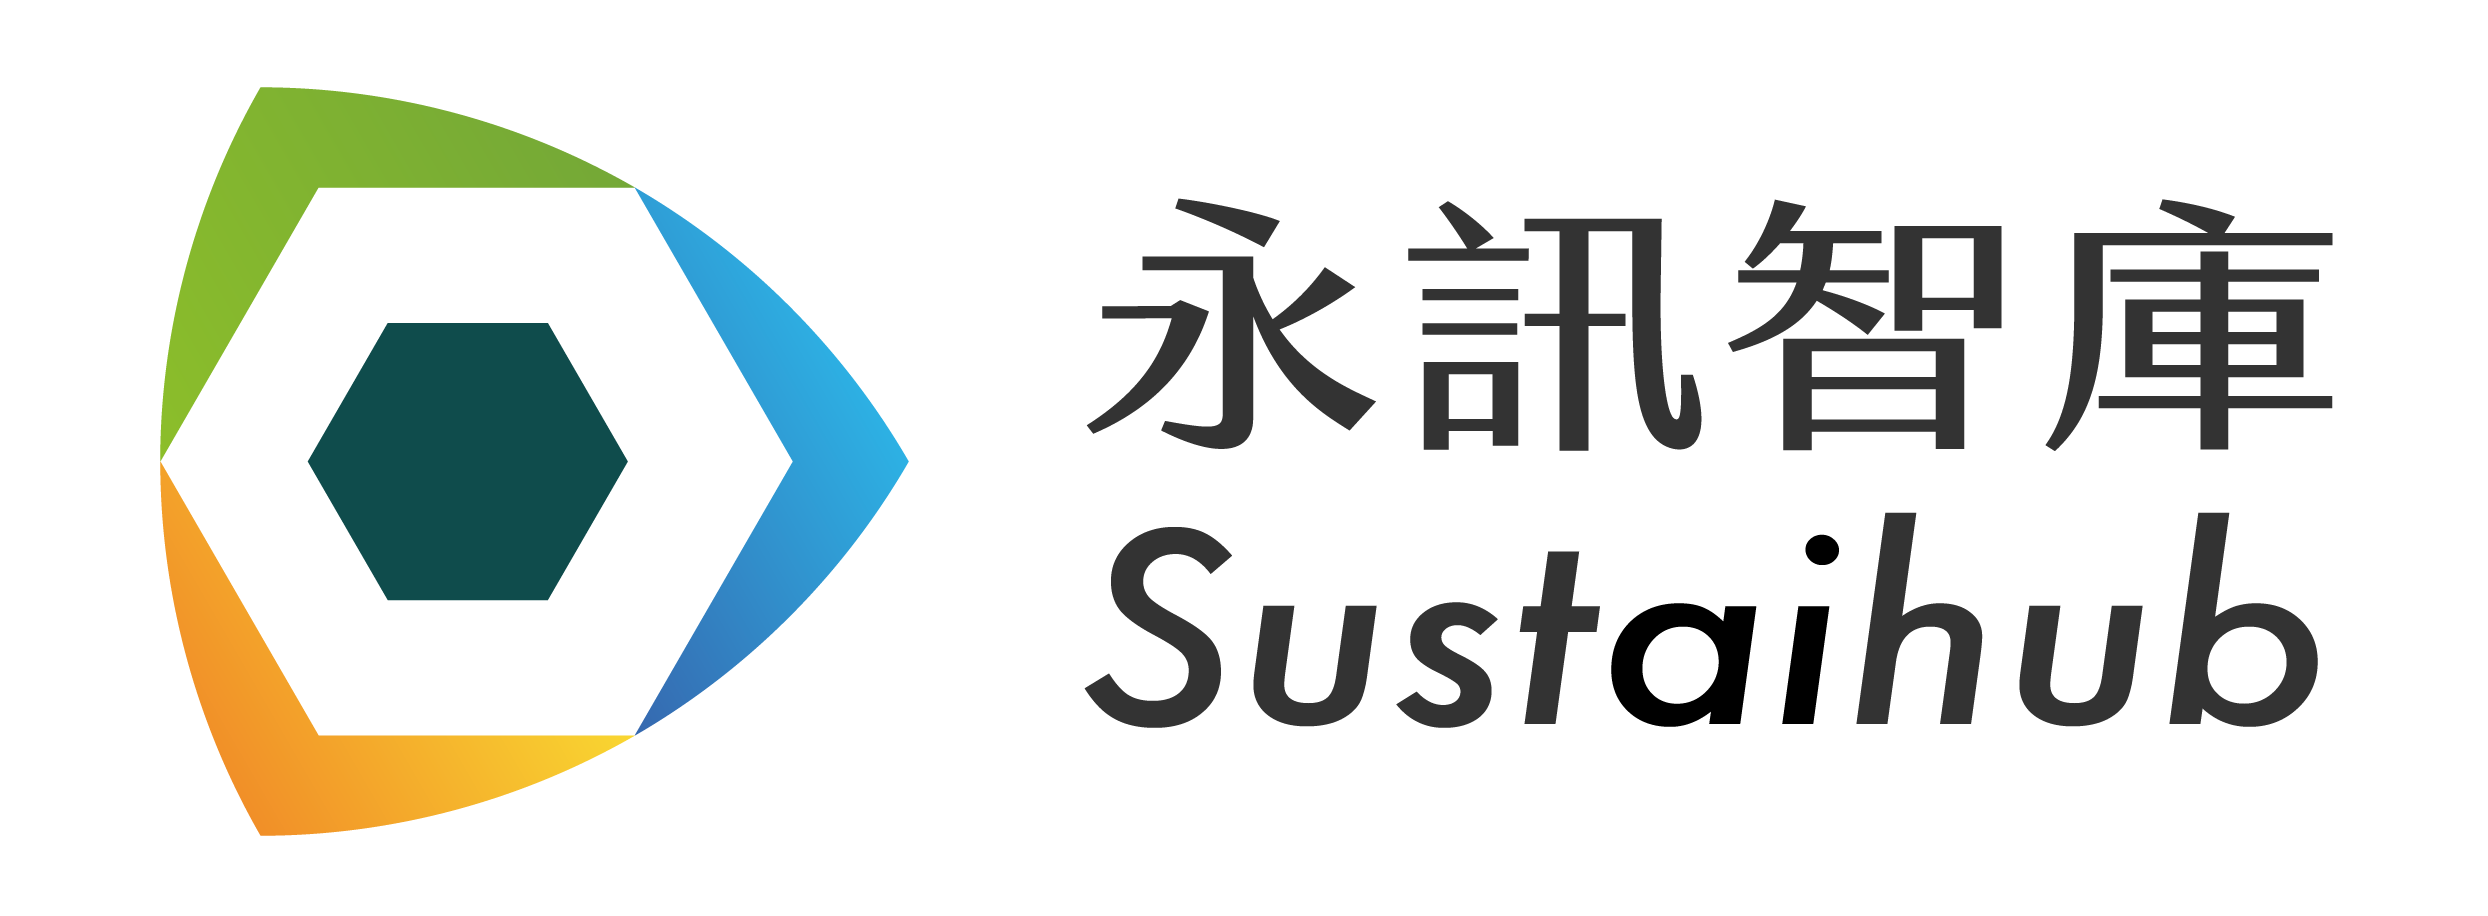 永讯智库-2020-startup